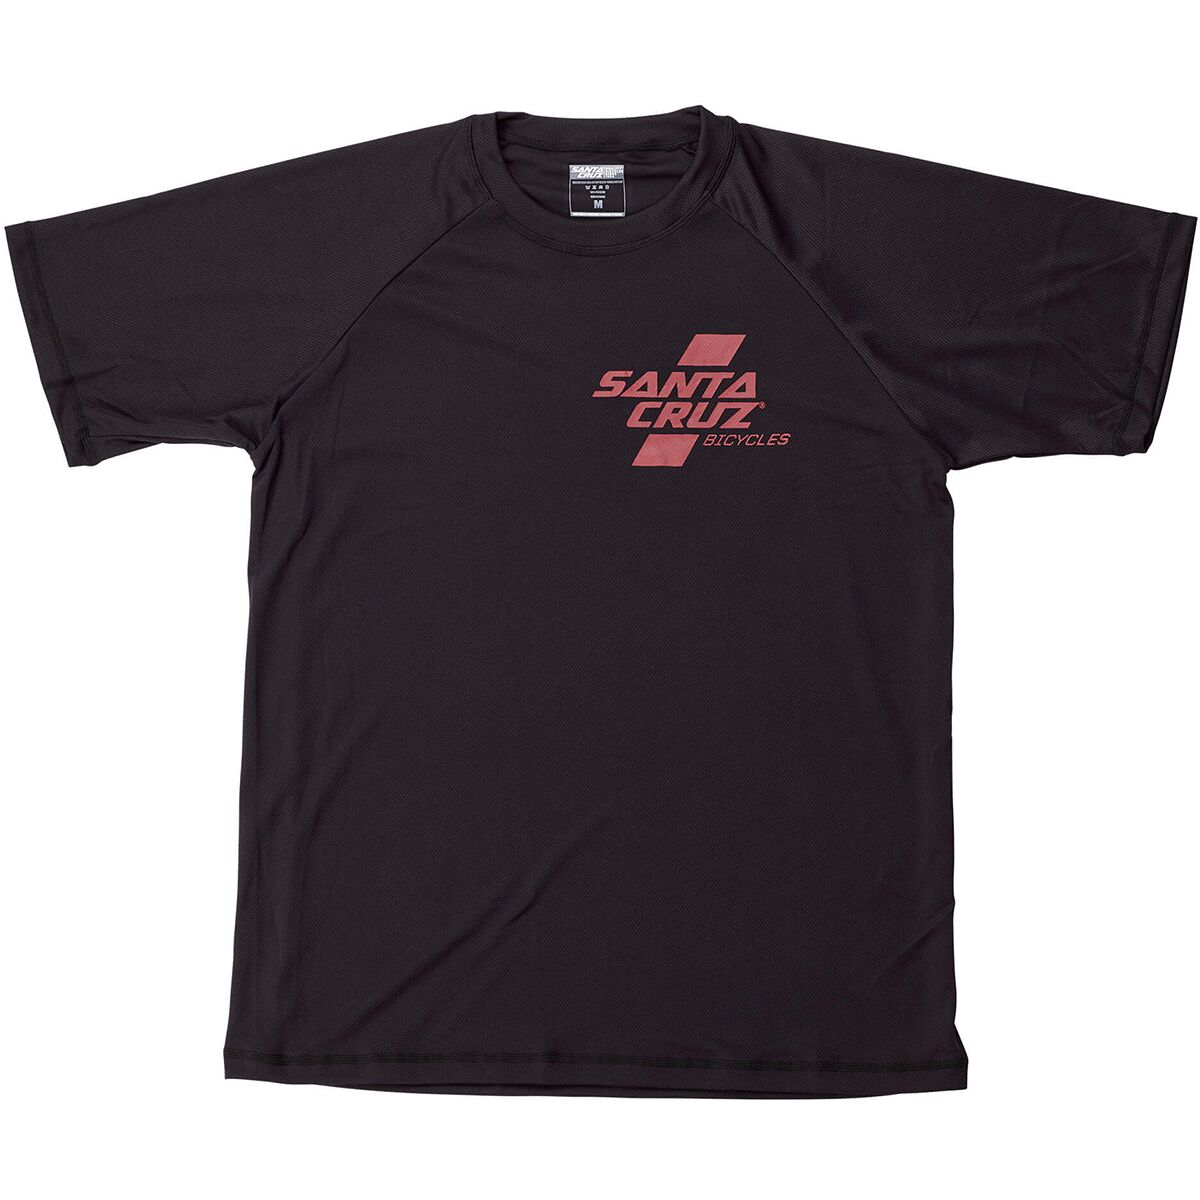 Santa Cruz Bicycles 2019 Short-Sleeve Tech T-Shirt - Men's